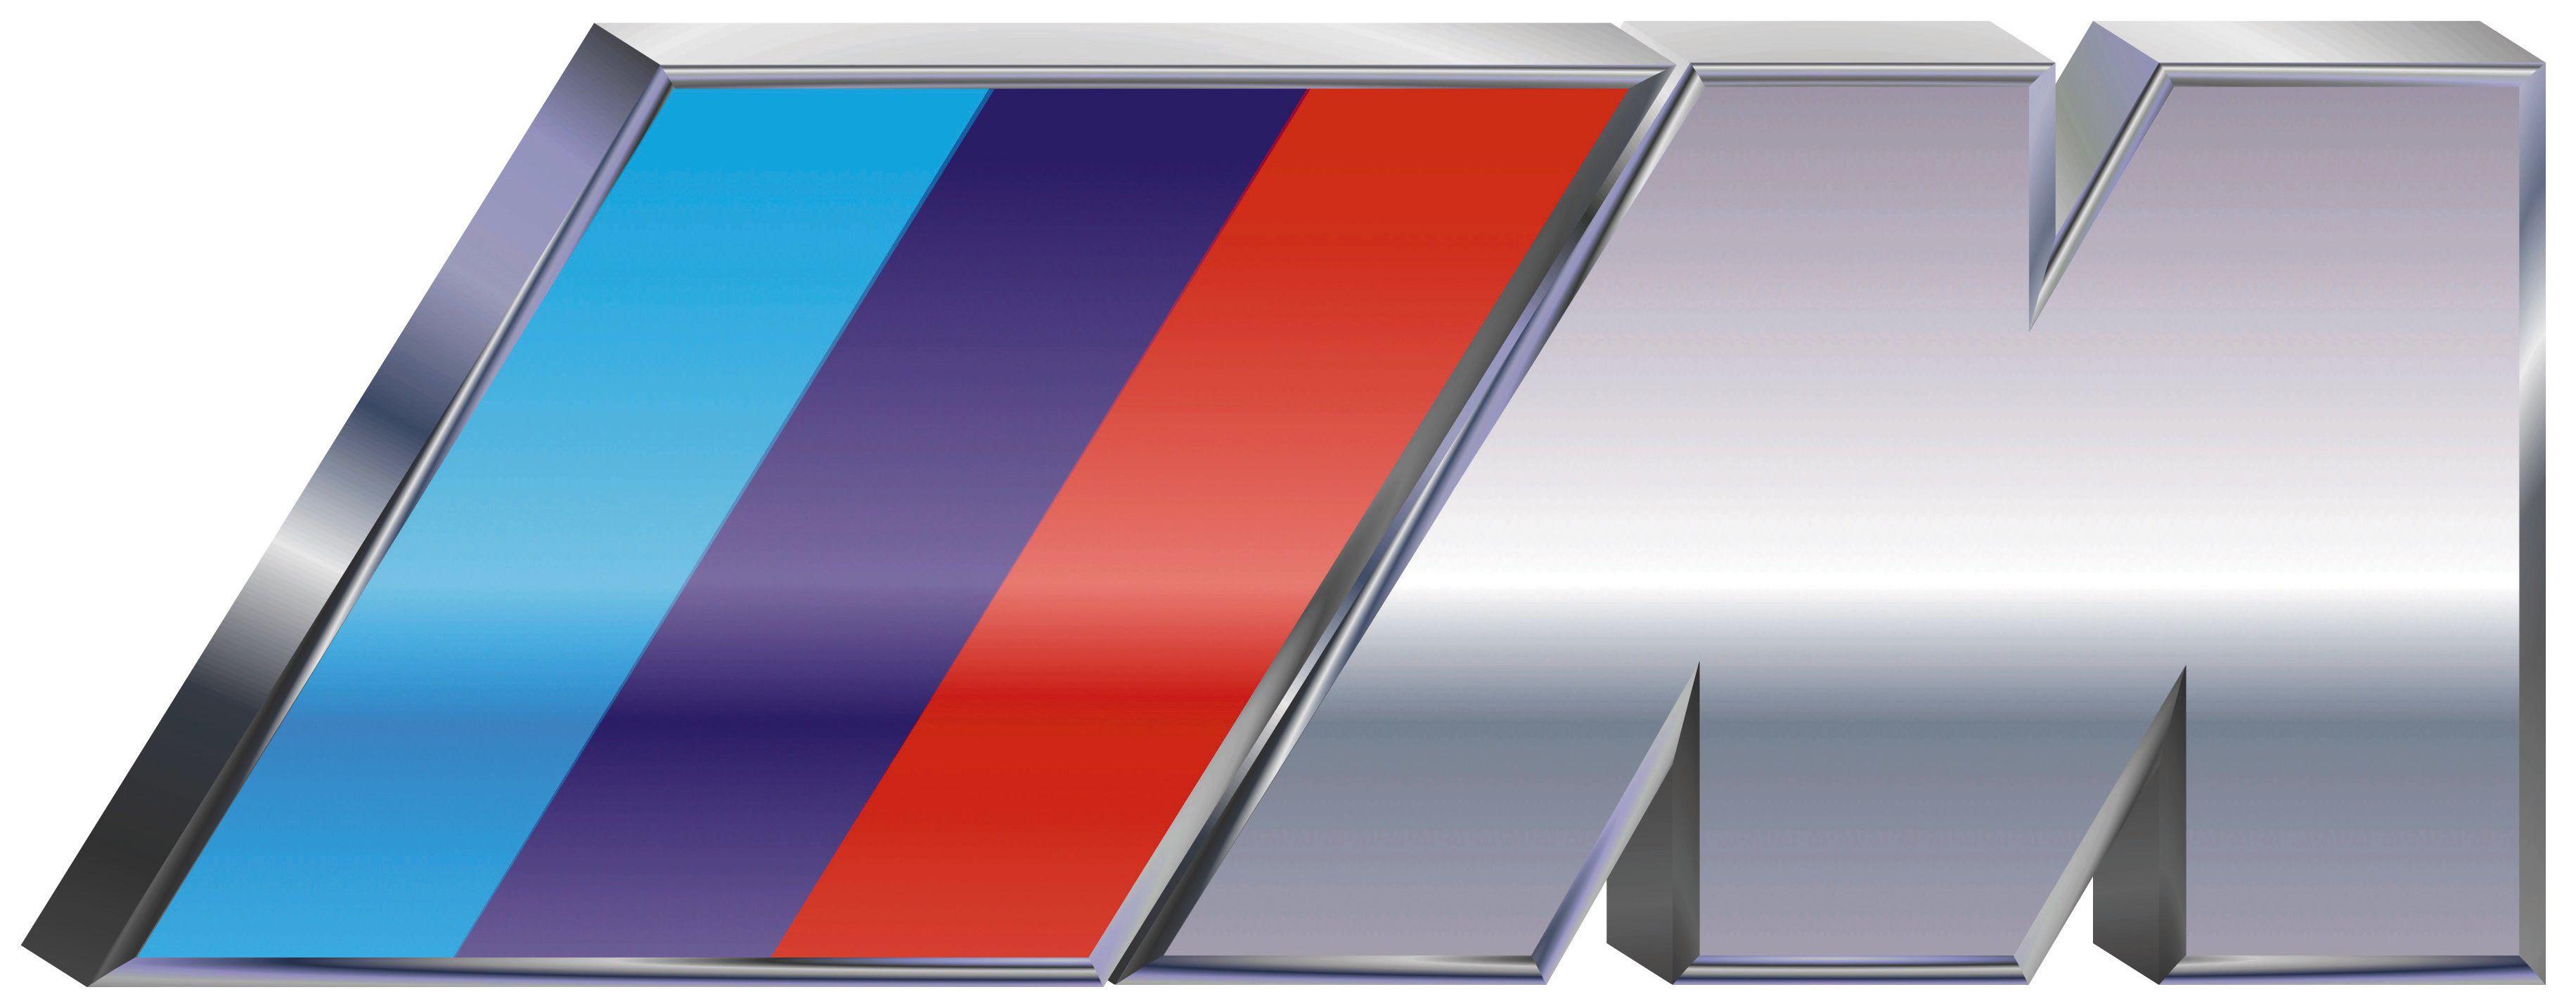 BMW M Car Logo - How to spot a genuine 'M' Series BMW